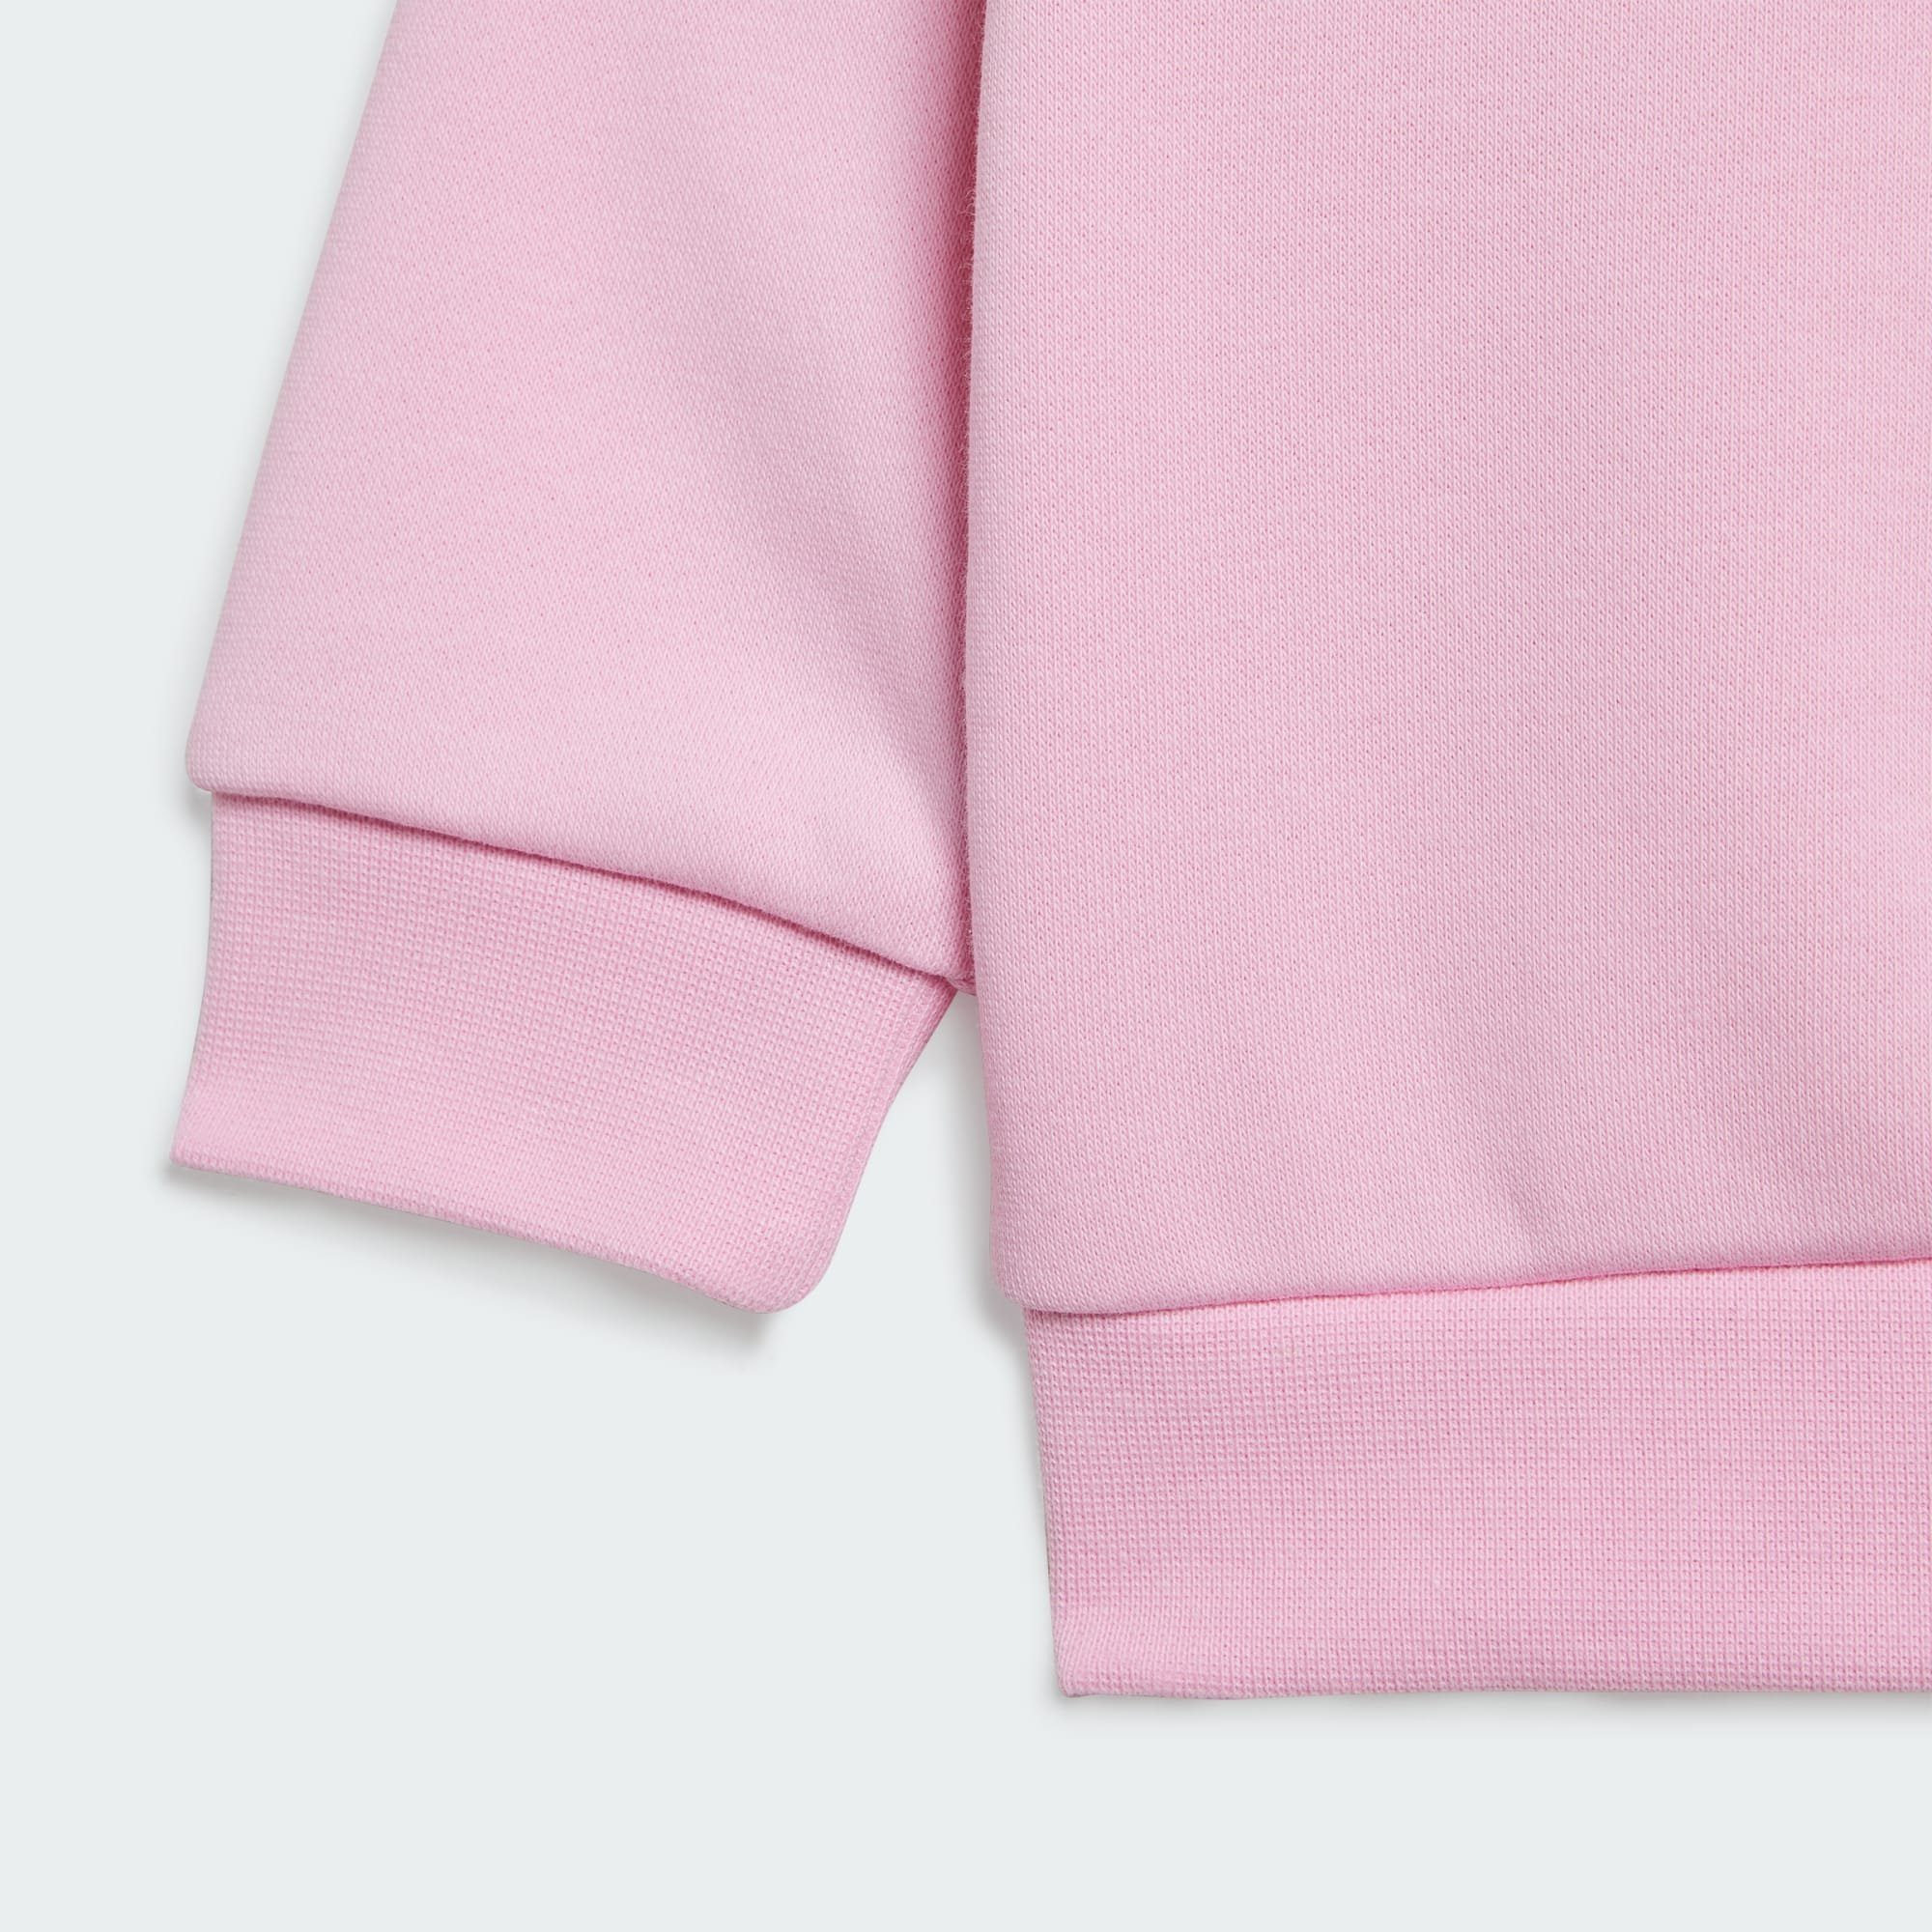 True ADICOLOR Originals SET Trainingsanzug adidas Pink